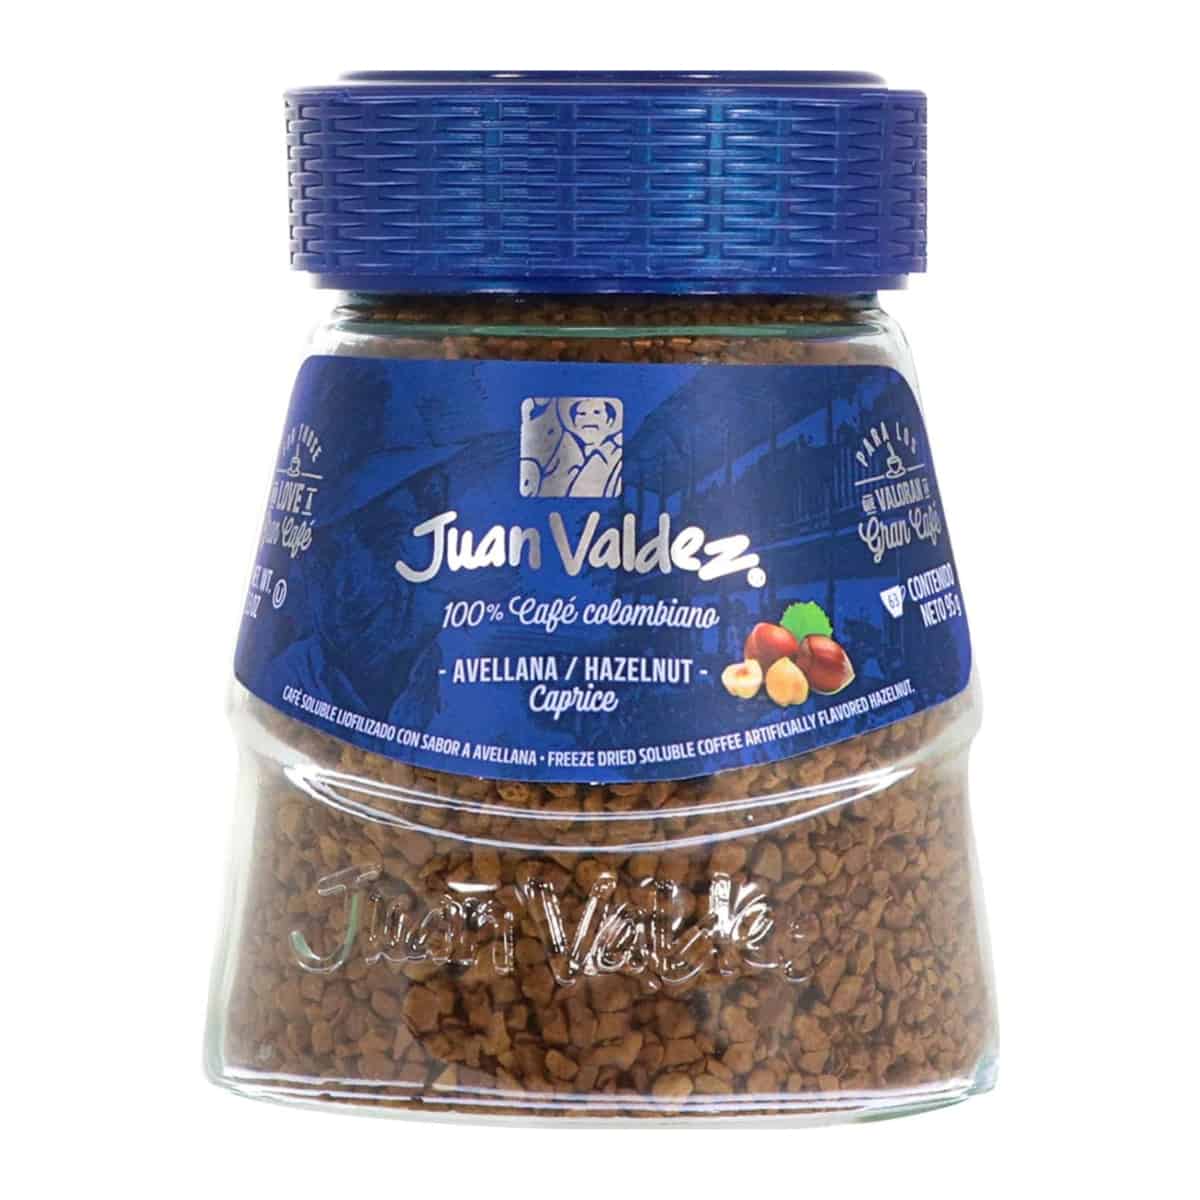 Buy Juan Valdez Hazelnut Freeze Dried Soluble Coffee (100% Colombian Coffee) - 95 gm